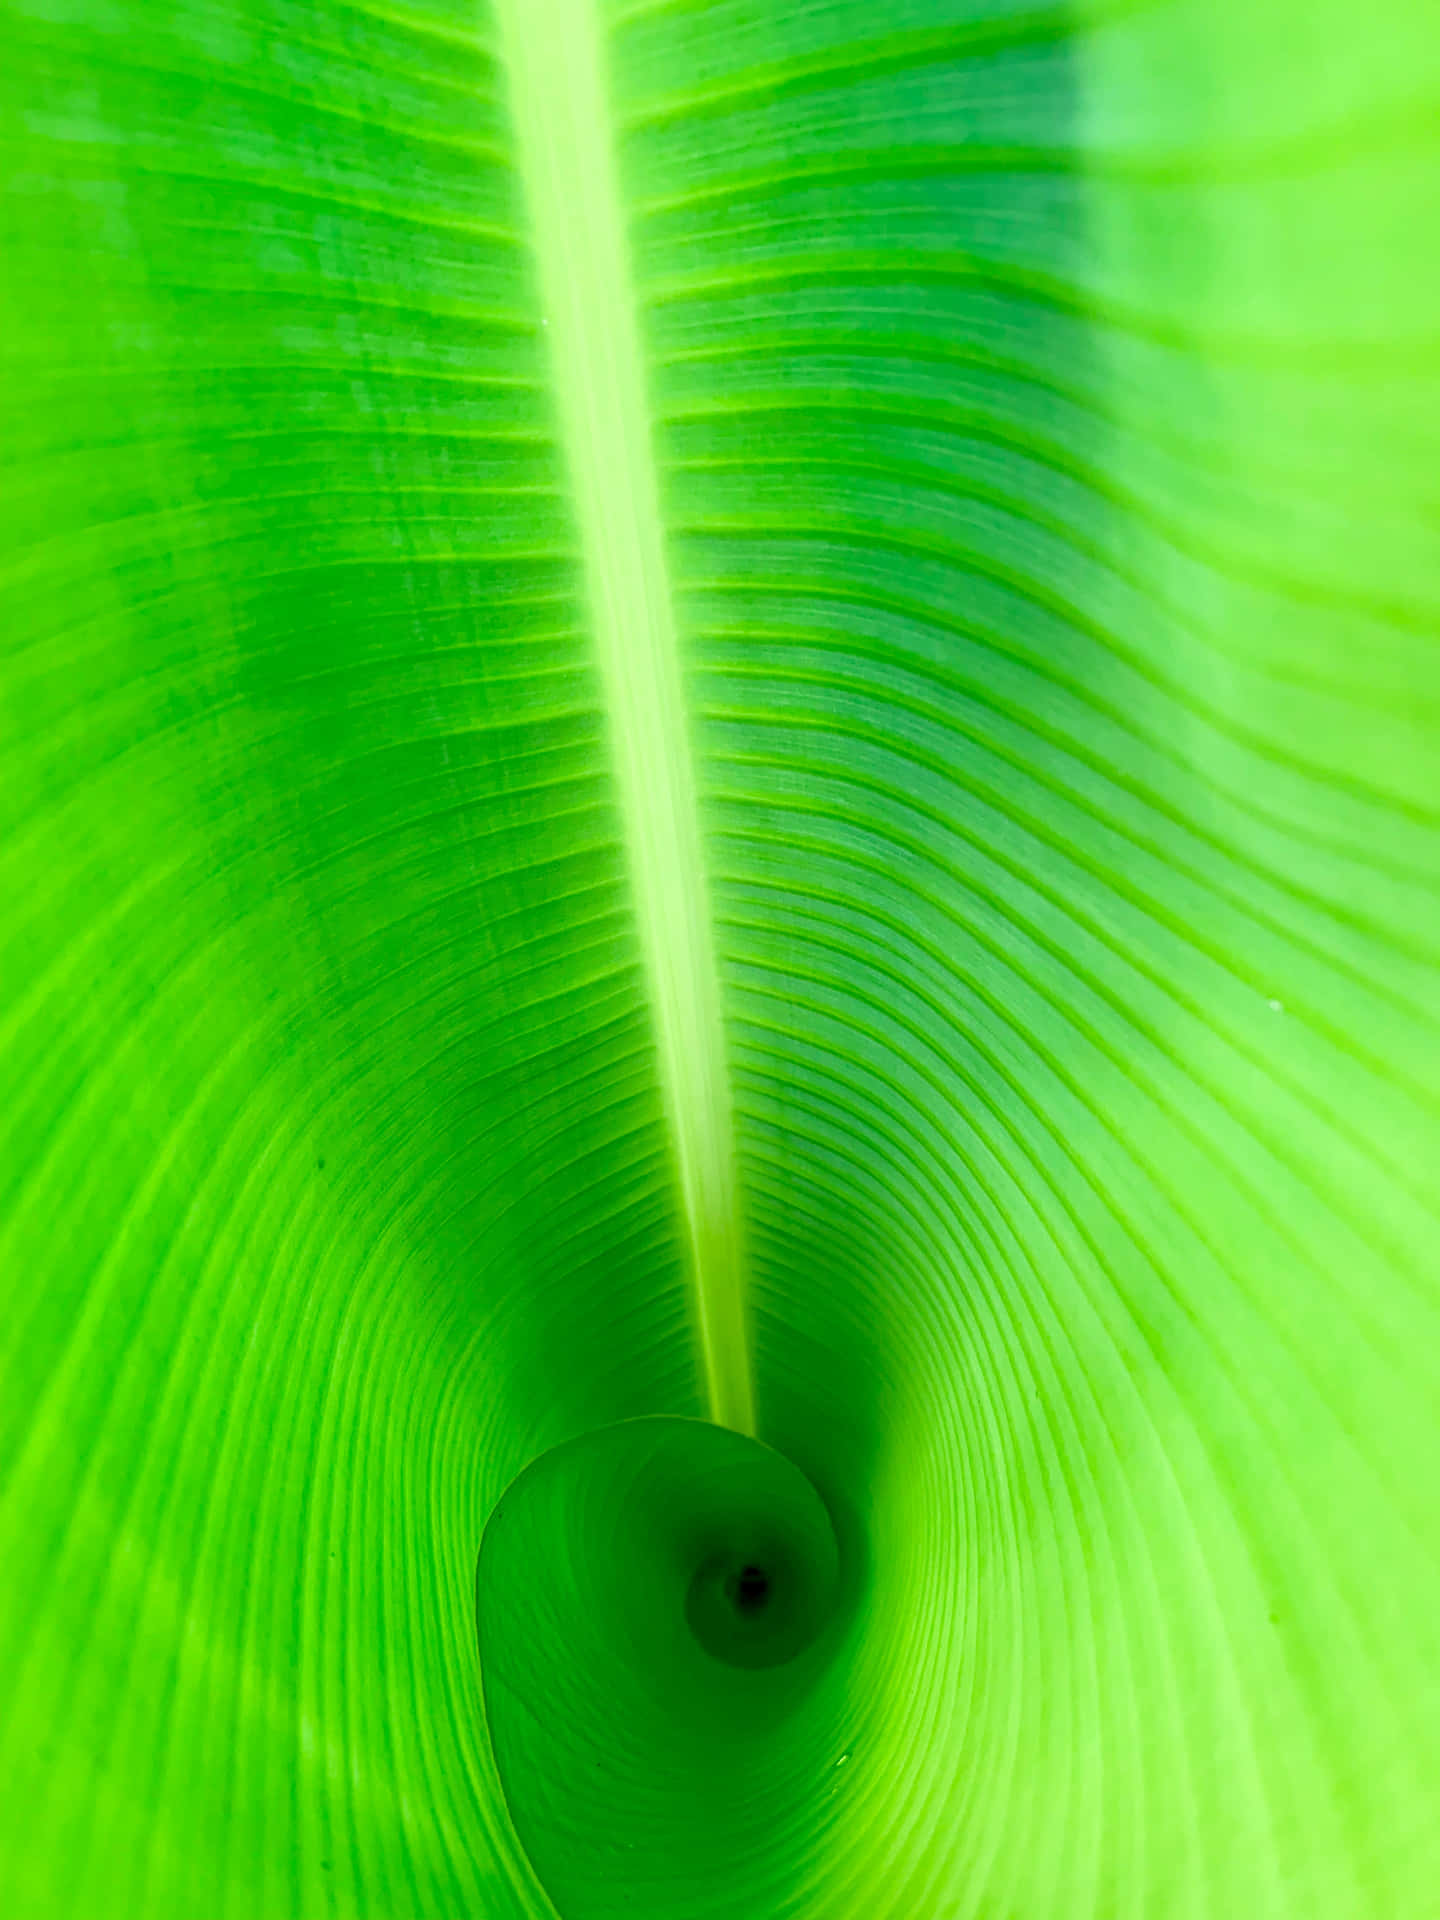 "A green Banana leaf on a sunny day"